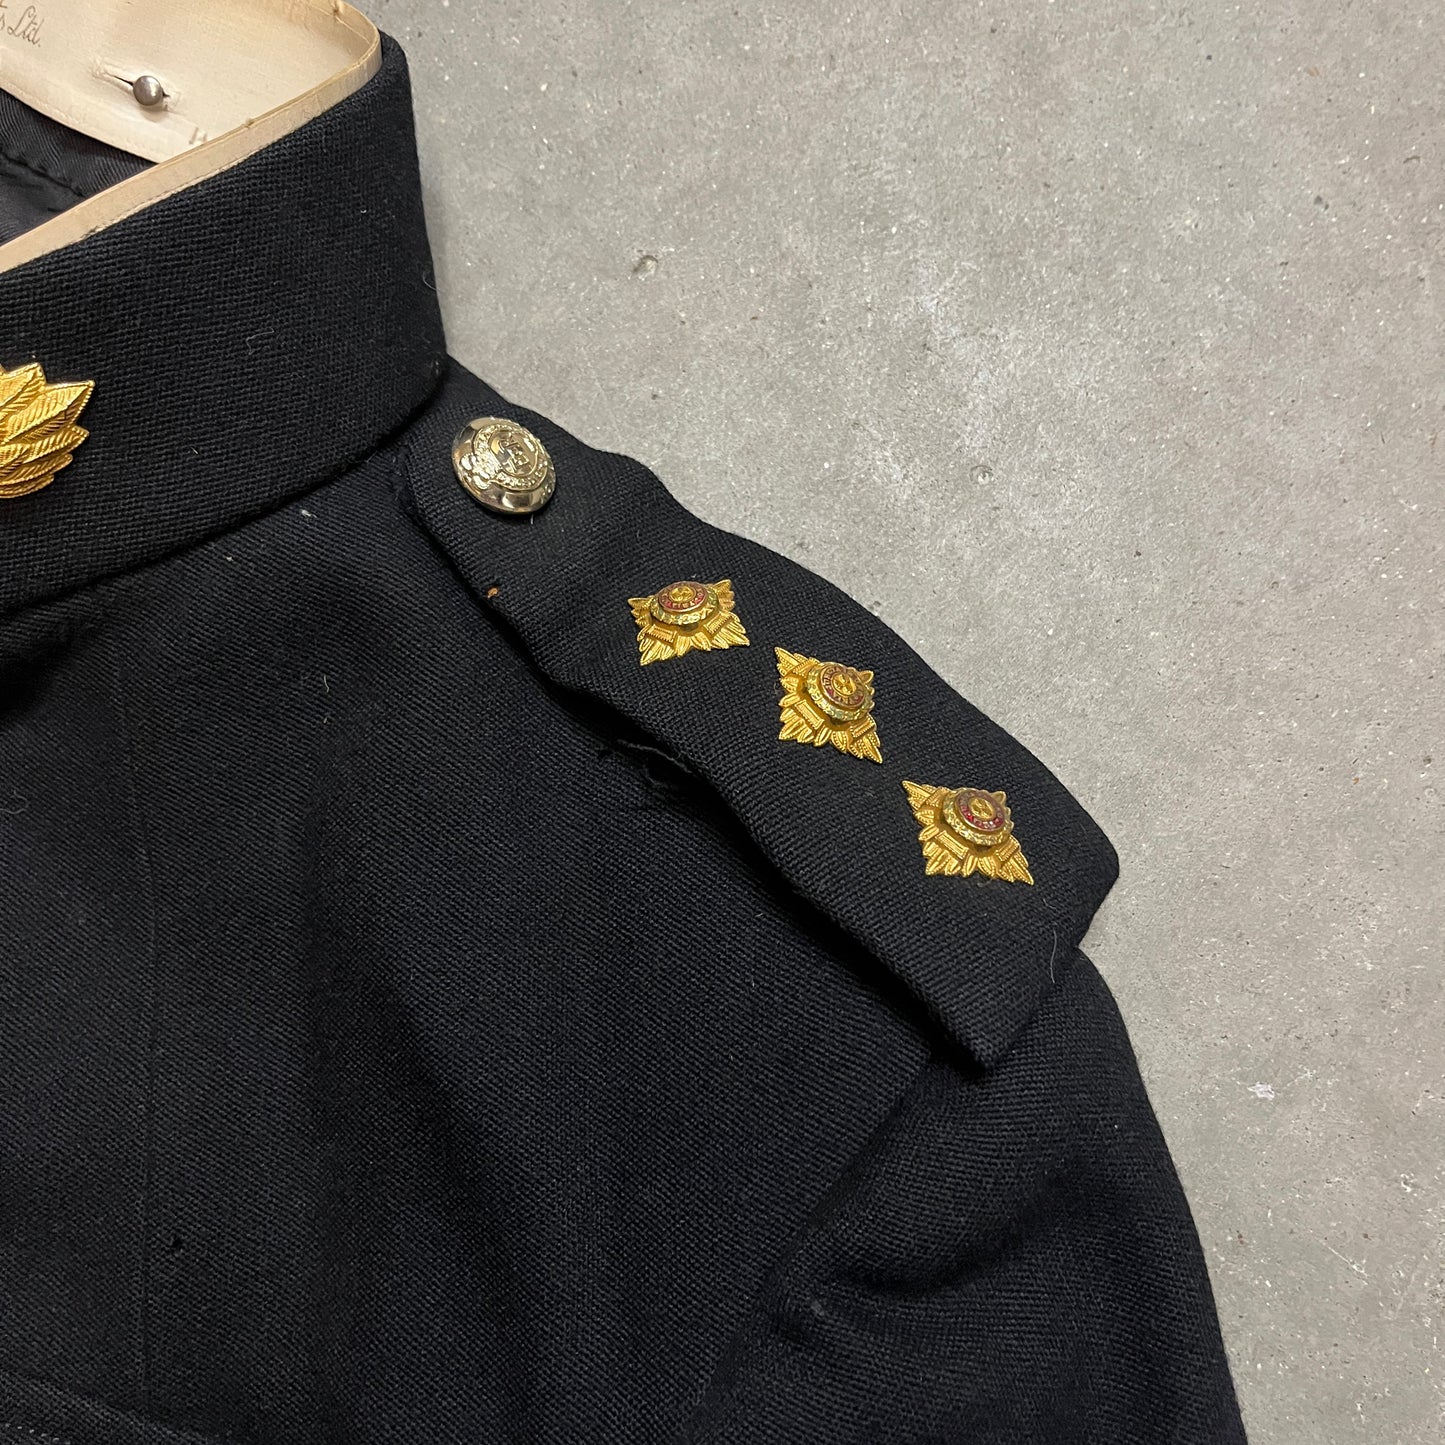 Dated 1949 Royal Artillery Officers Patrol Uniform by "Flights"